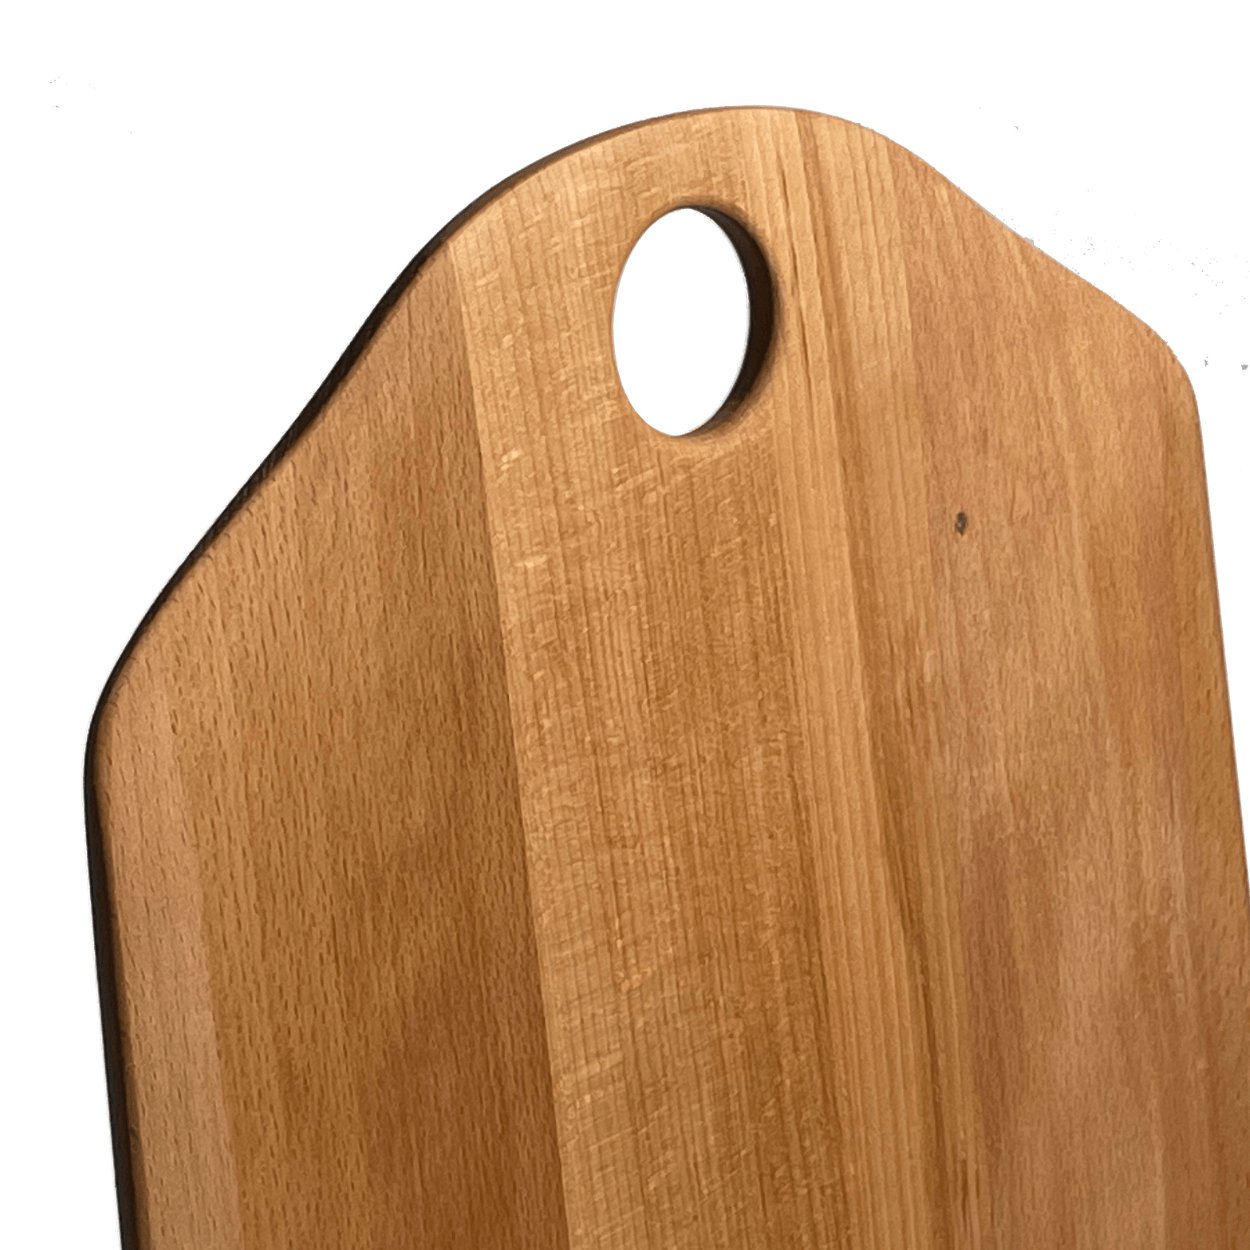 Wood Charcuterie Board #2